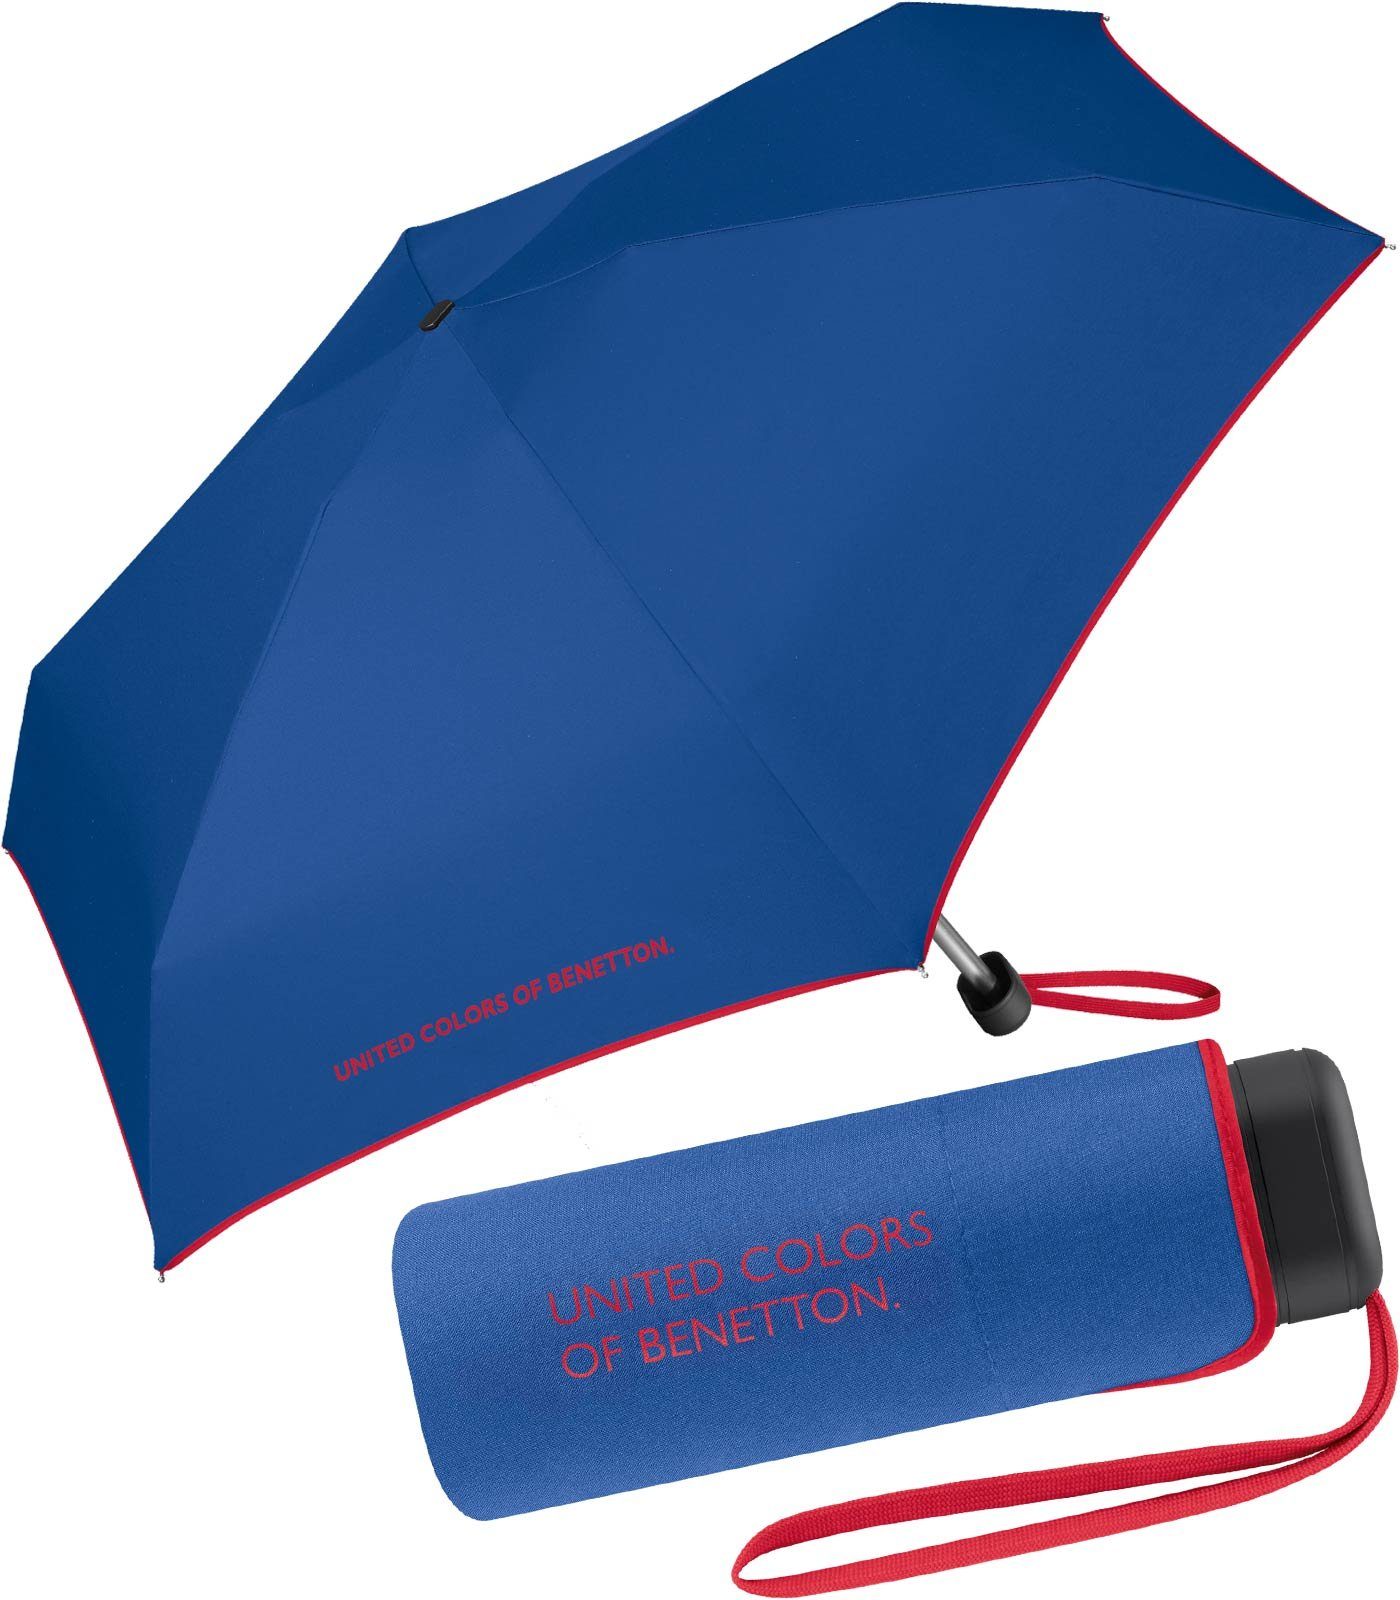 United Colors of Benetton Taschenregenschirm winziger Damen-Regenschirm mit Handöffner, mit Kontrastfarben am Schirmrand - blau-rot